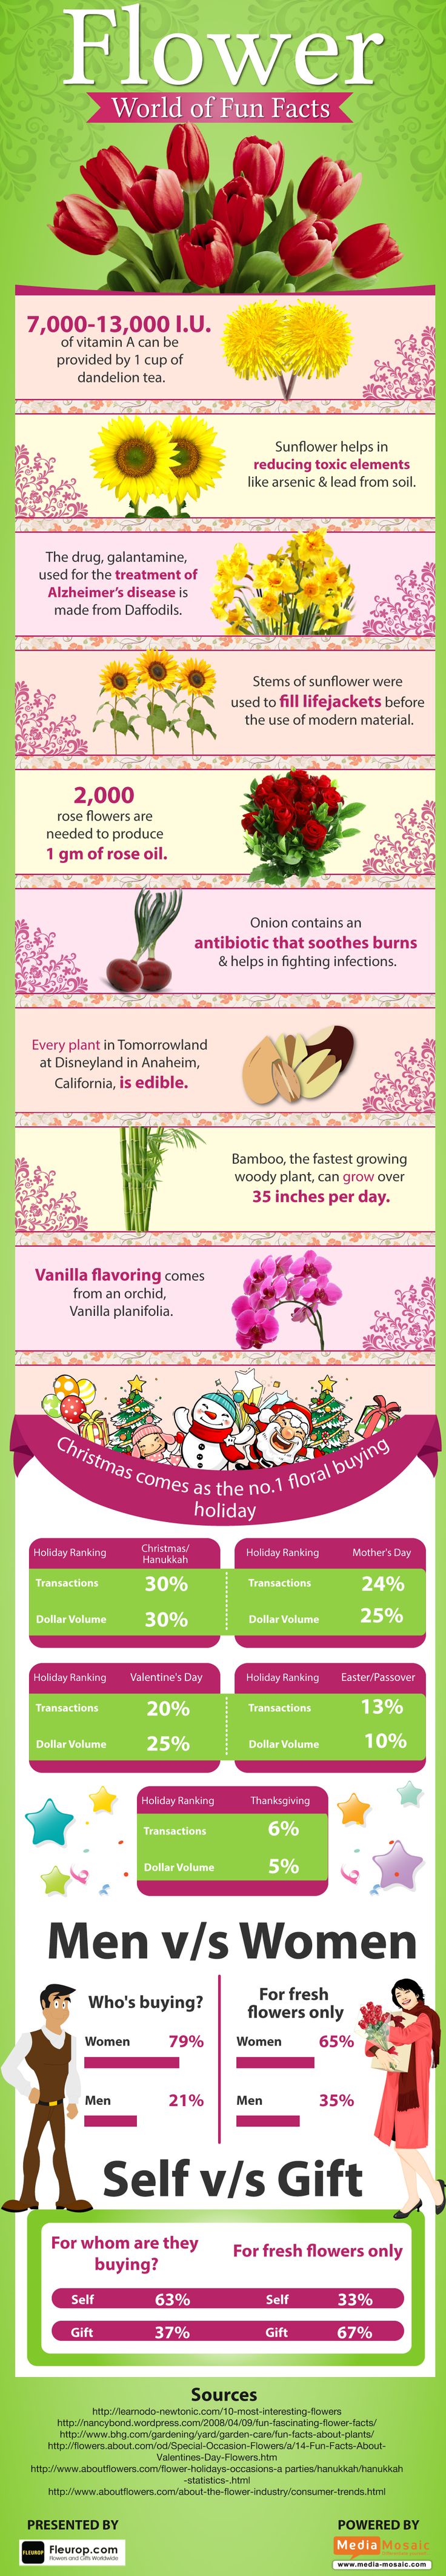 Flower World of Fun Facts